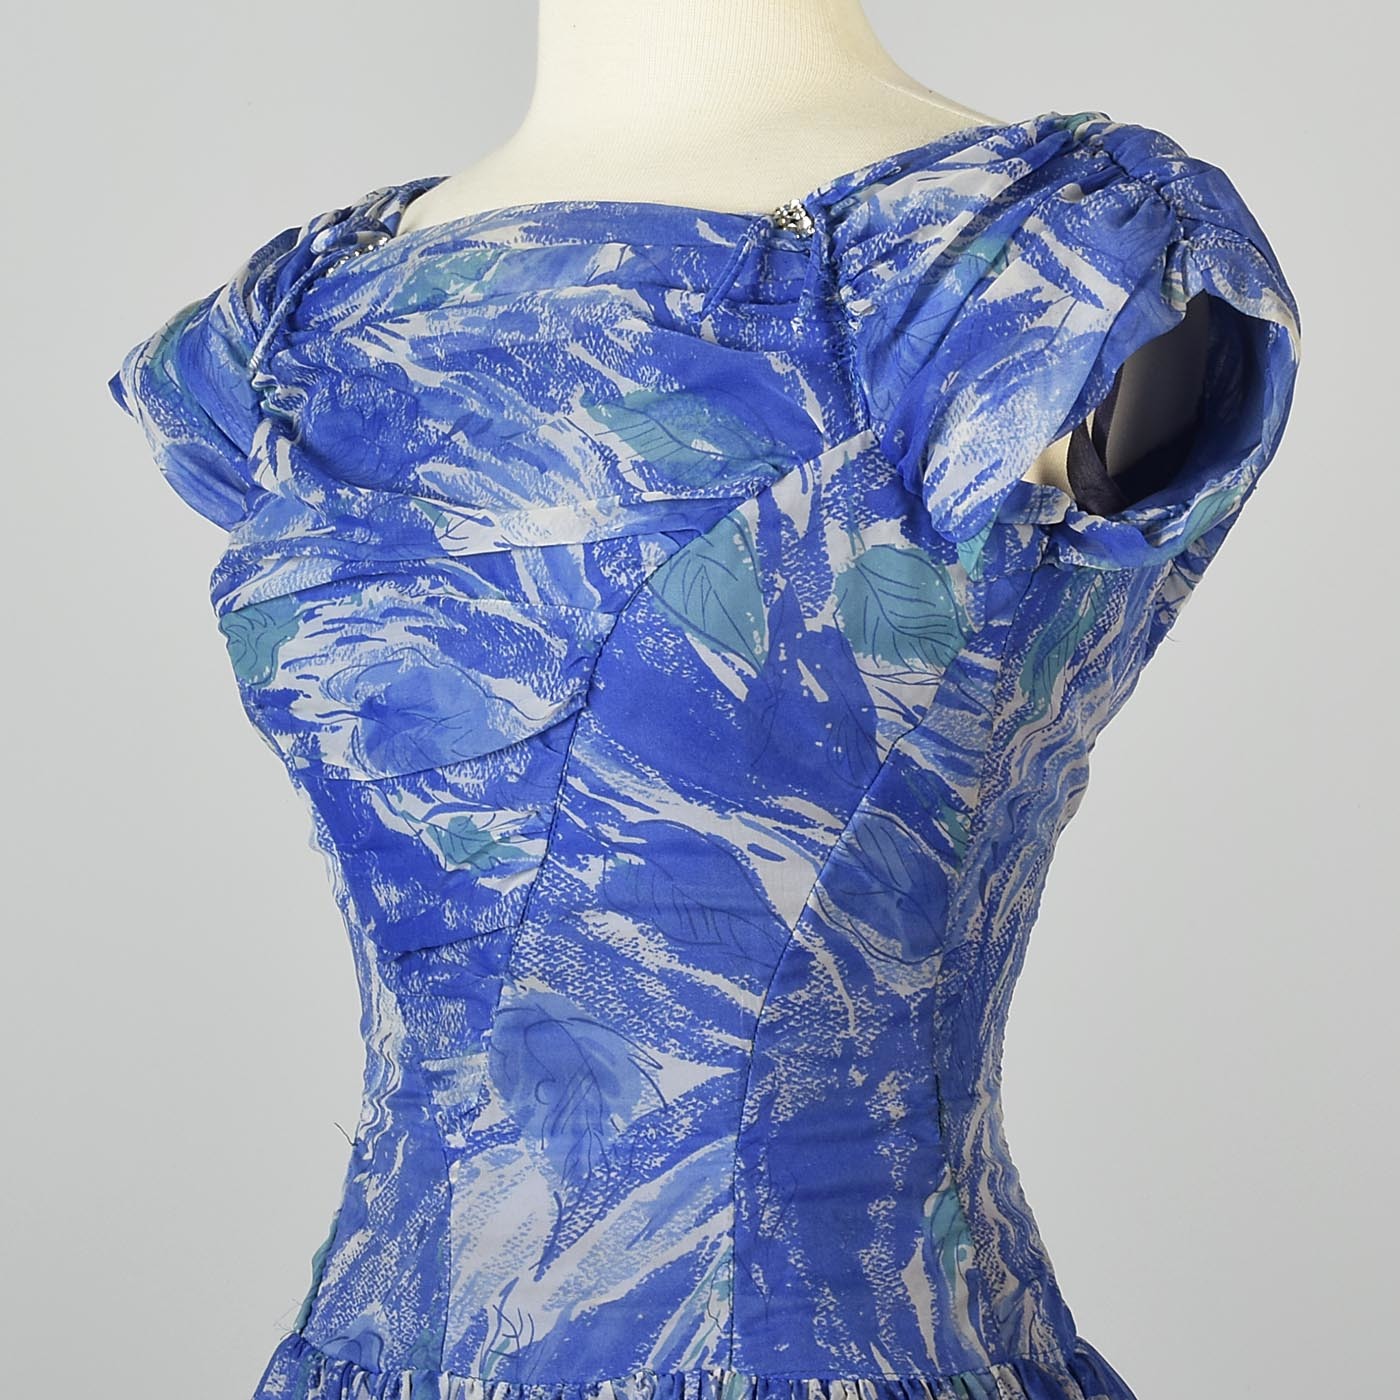 1950s Blue Chiffon Dress in Watercolor Print